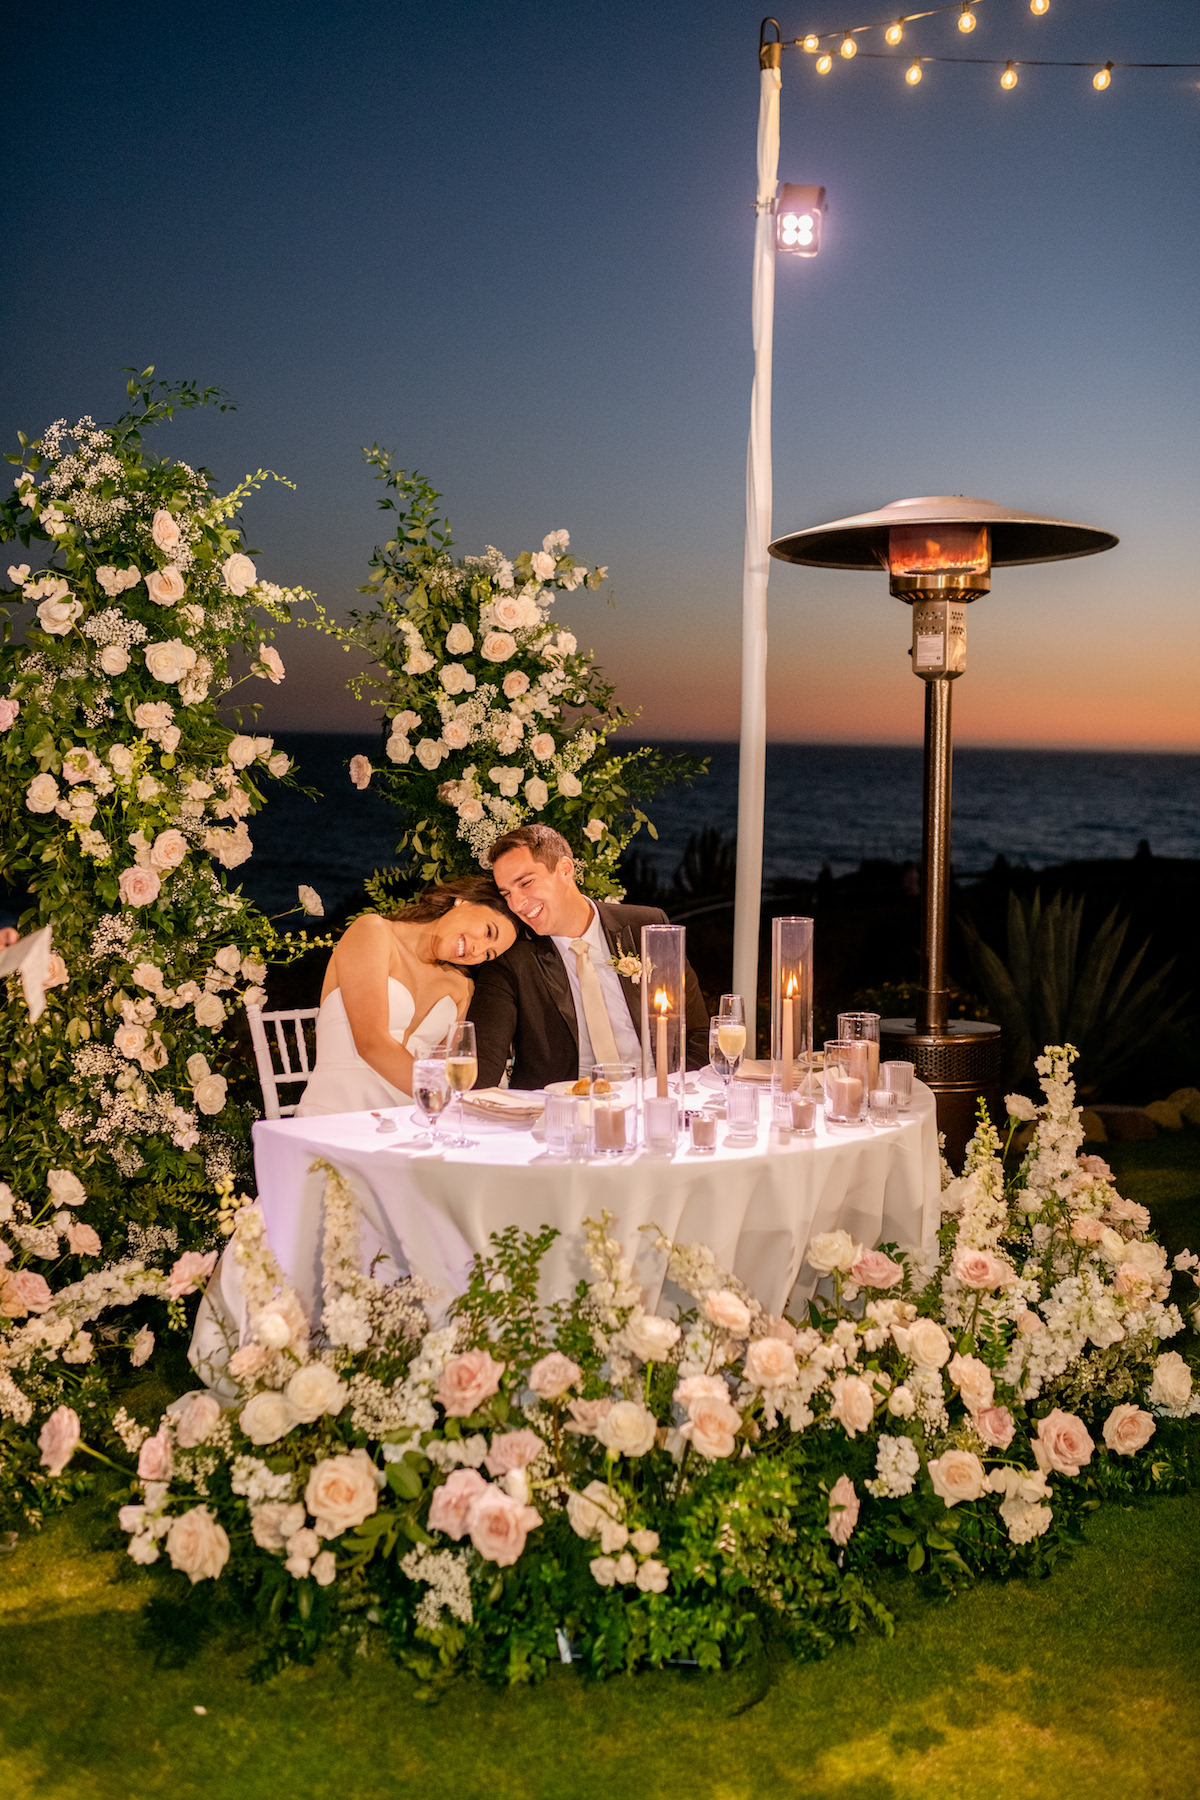 Romantic Sweetheart table spring wedding reception decor - Holly Sigafoos Photo